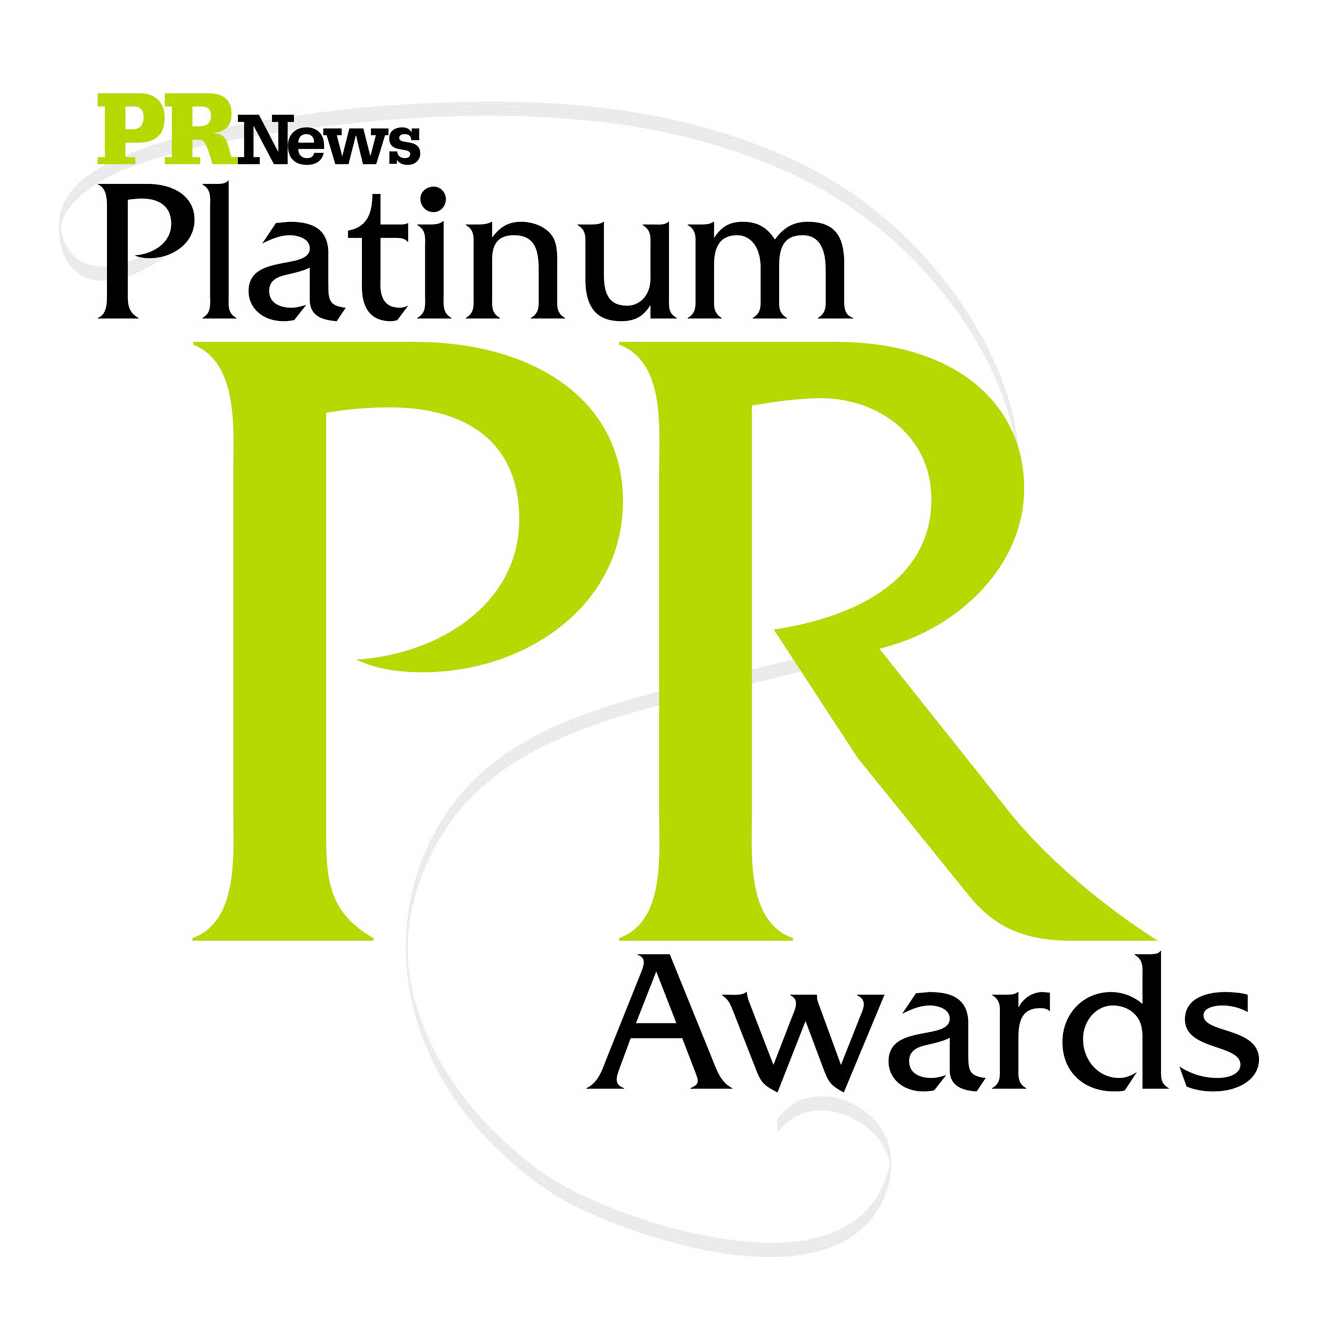 (PR News) Platinum Awards